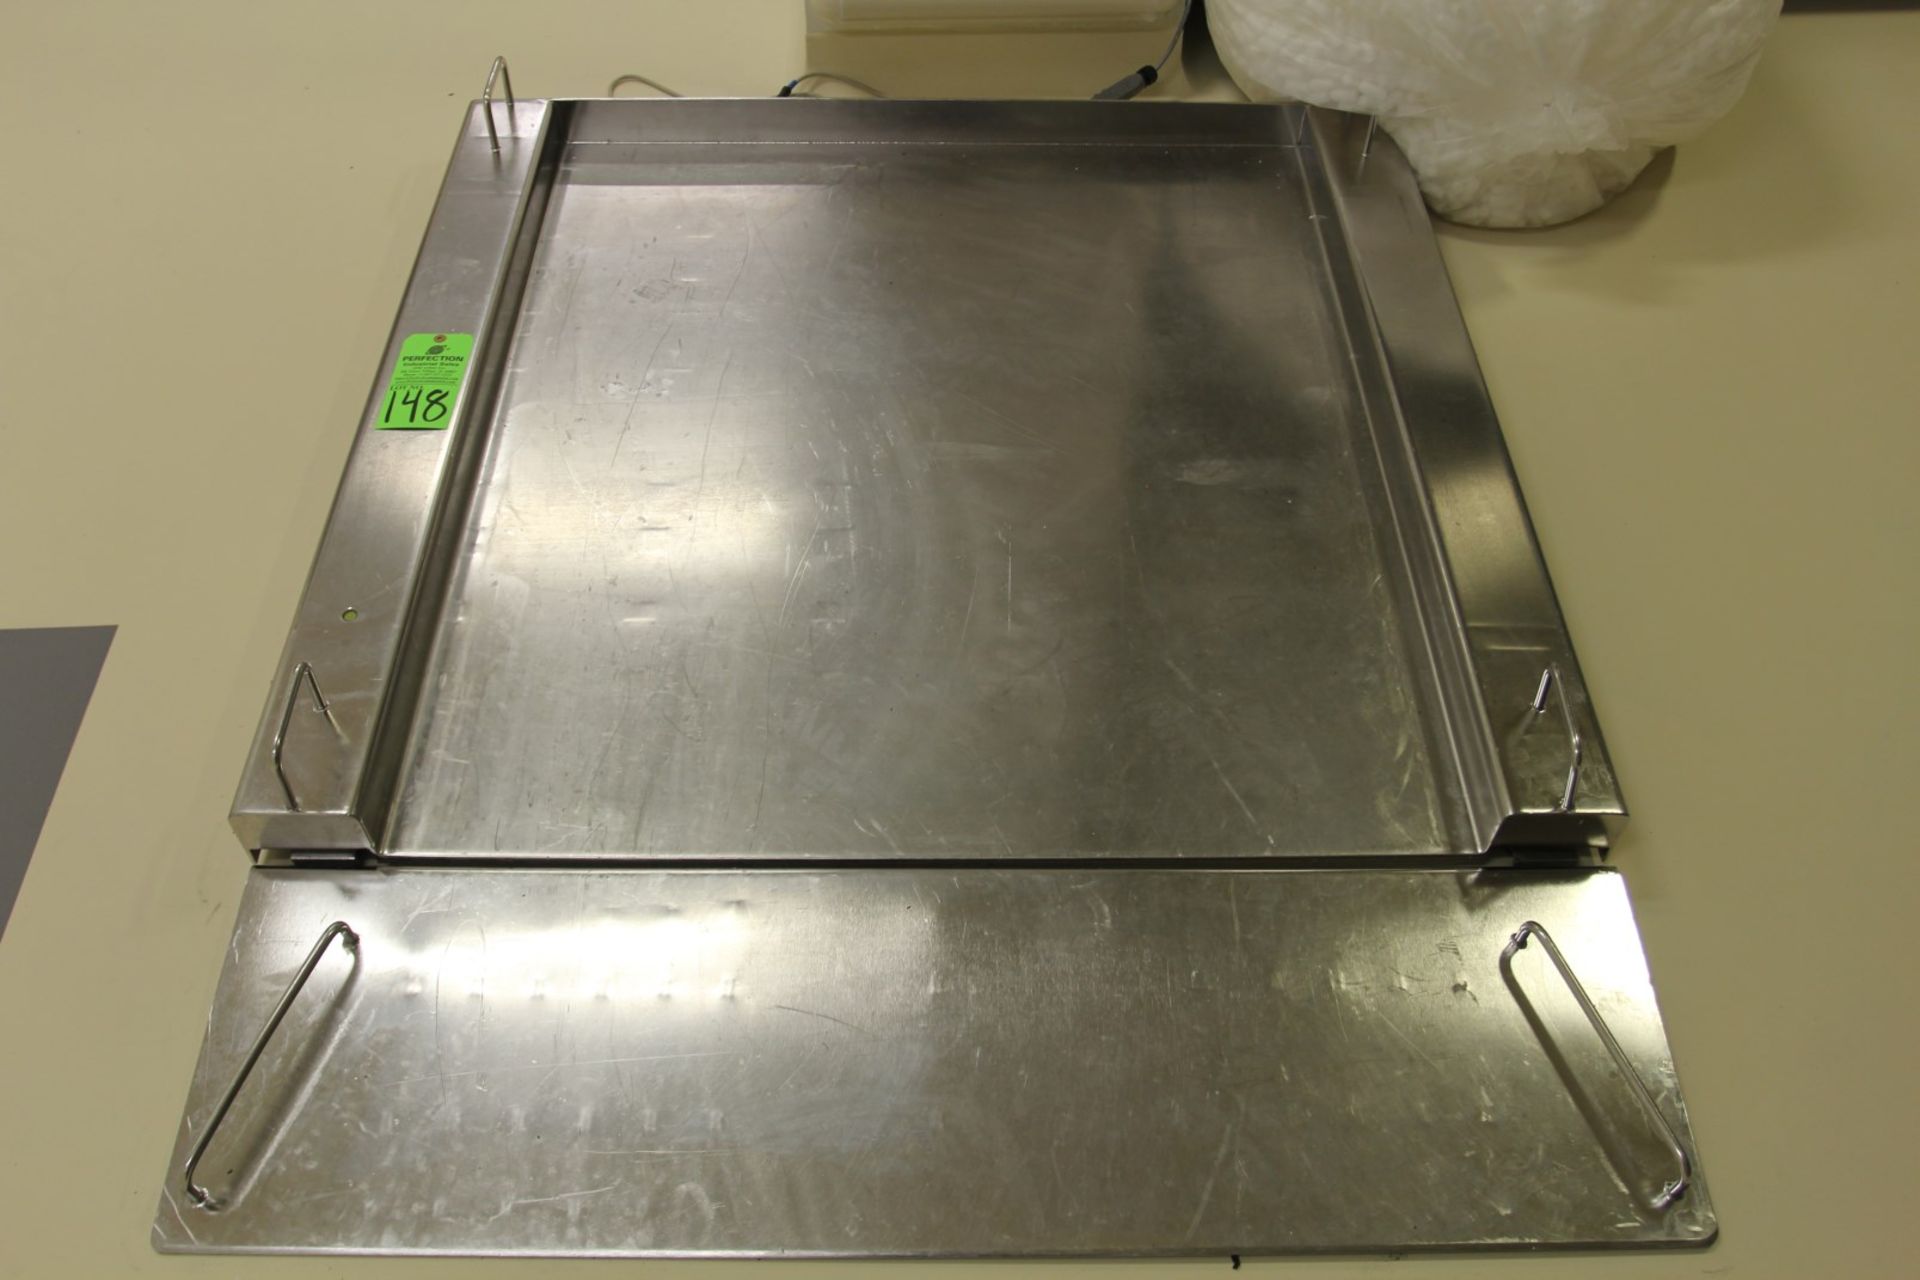 1500 kg Sartorius IFS4-1500-NL Stainless Steel Floor Scale, s/n na, 115cm x 100cm, Siebert Readout